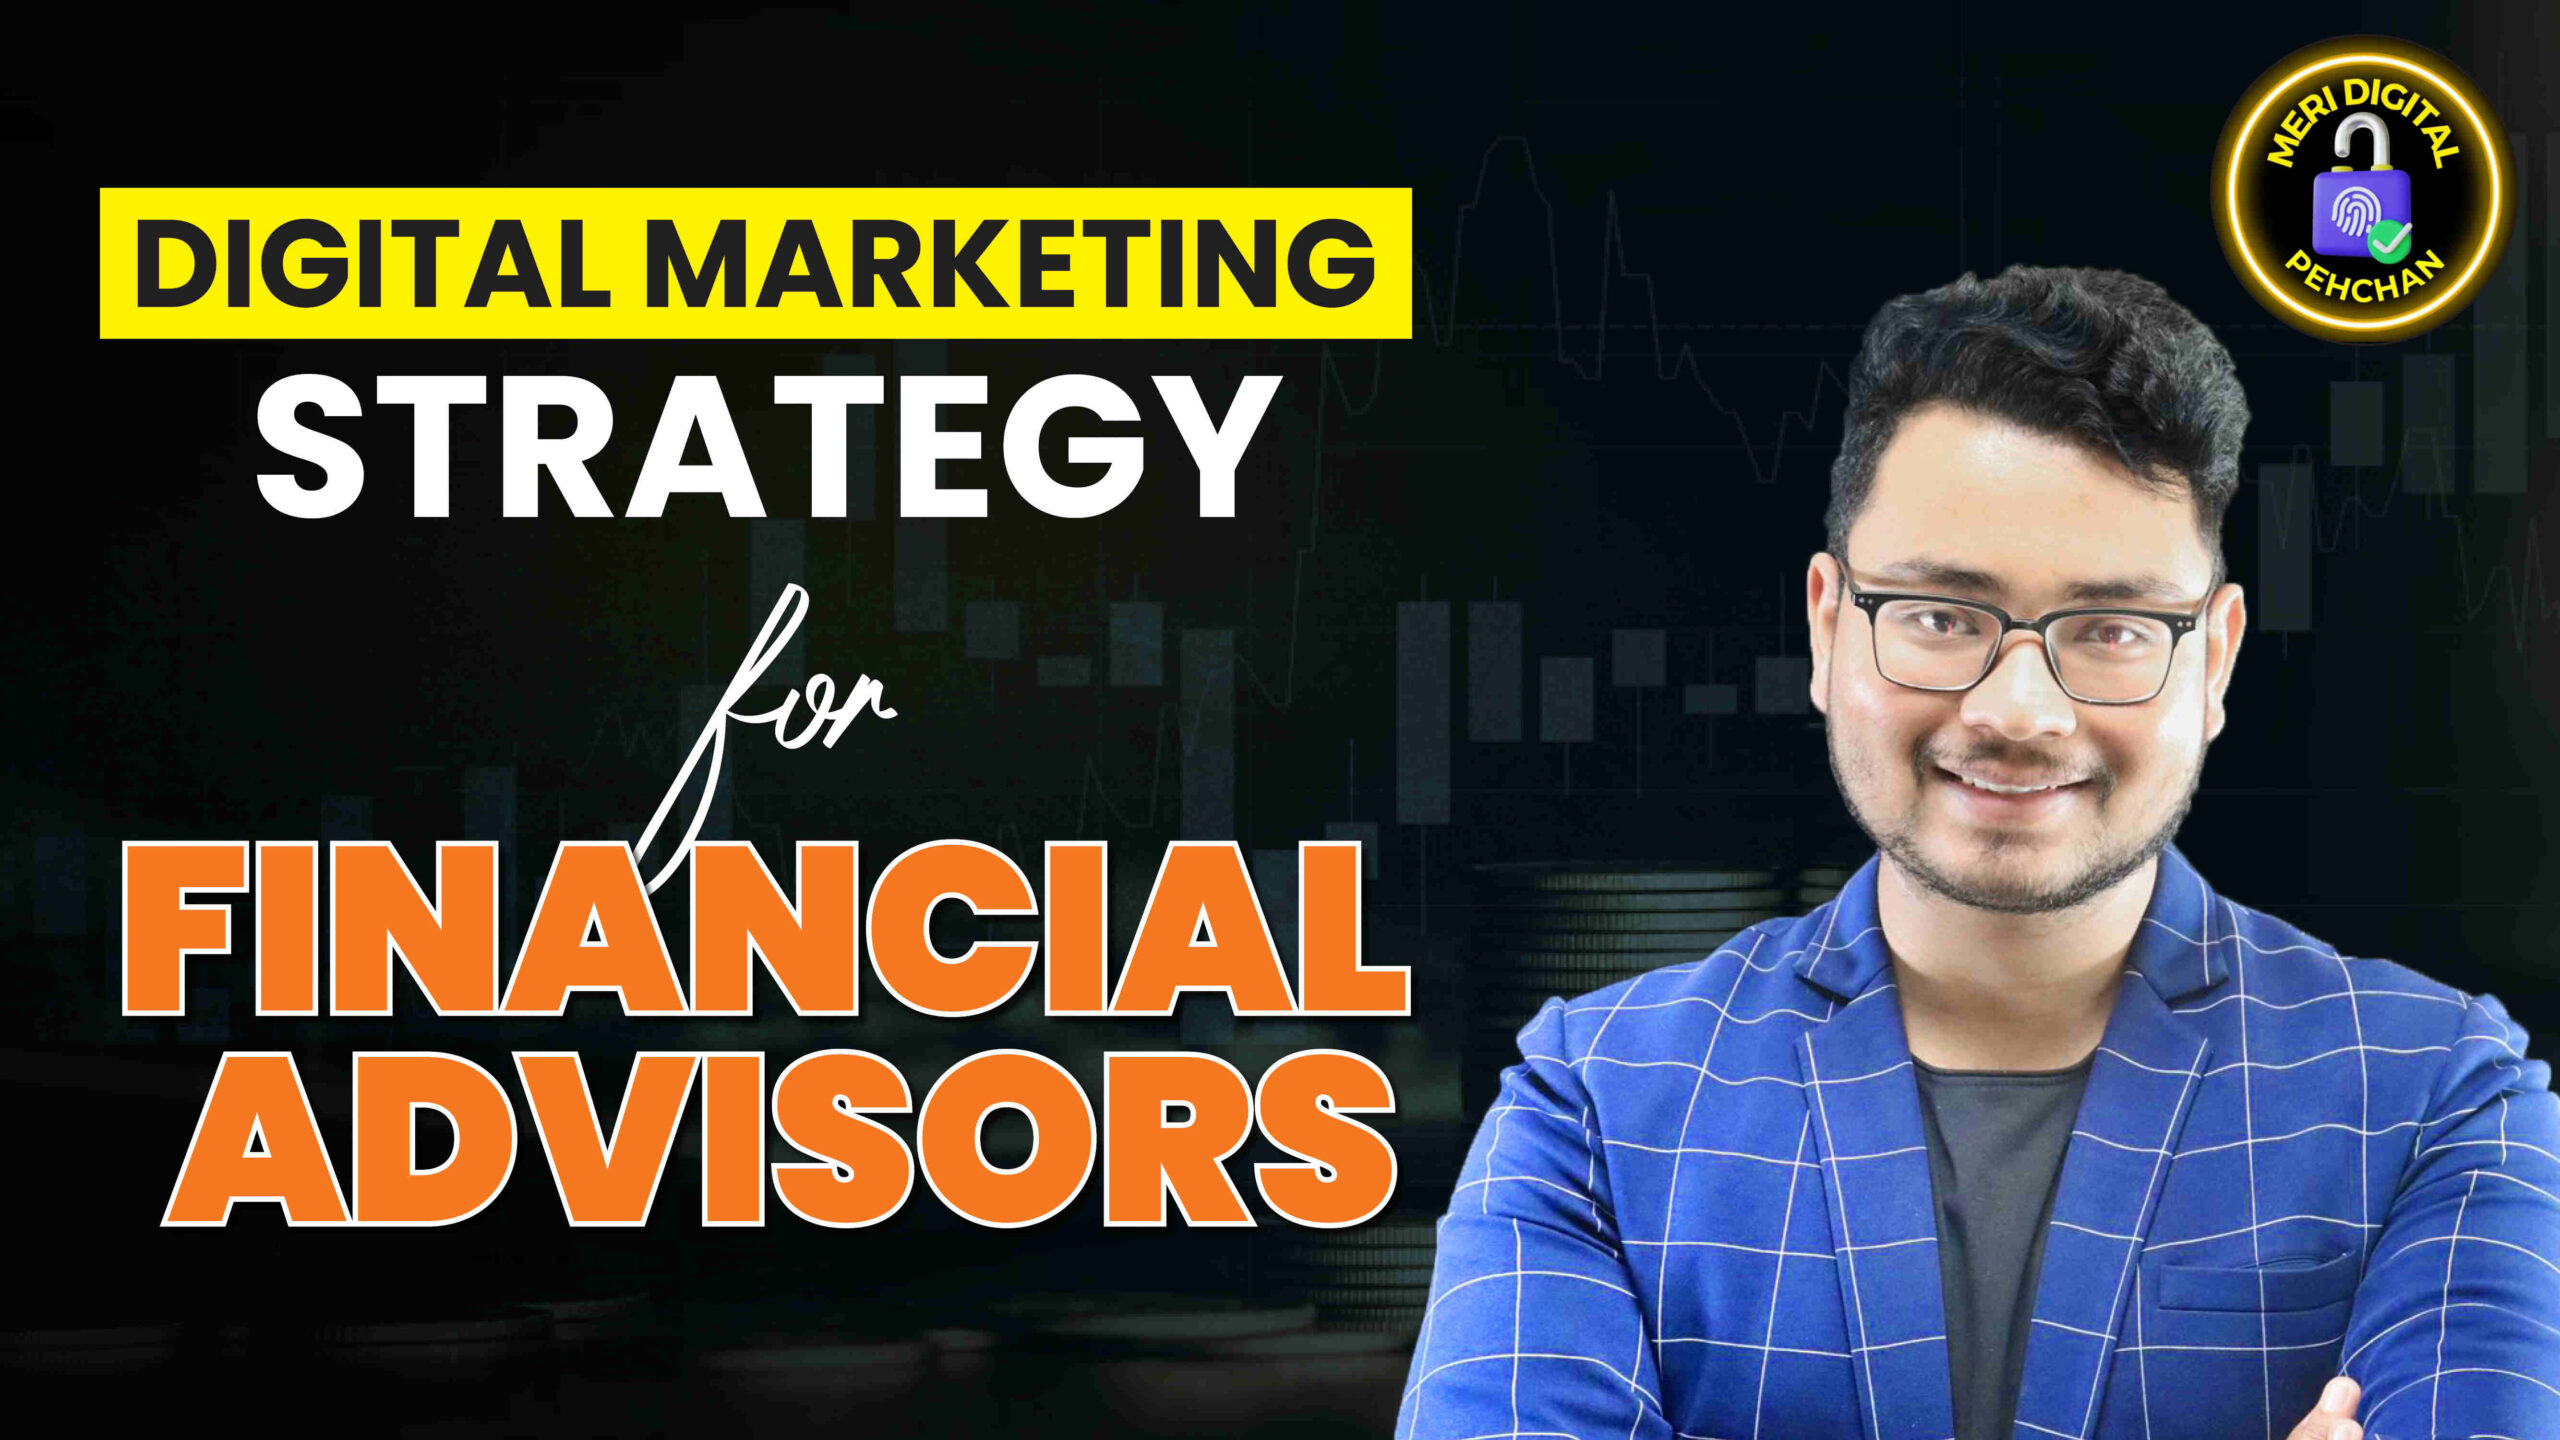 Digital Marketing Strategy for Financial Advisors